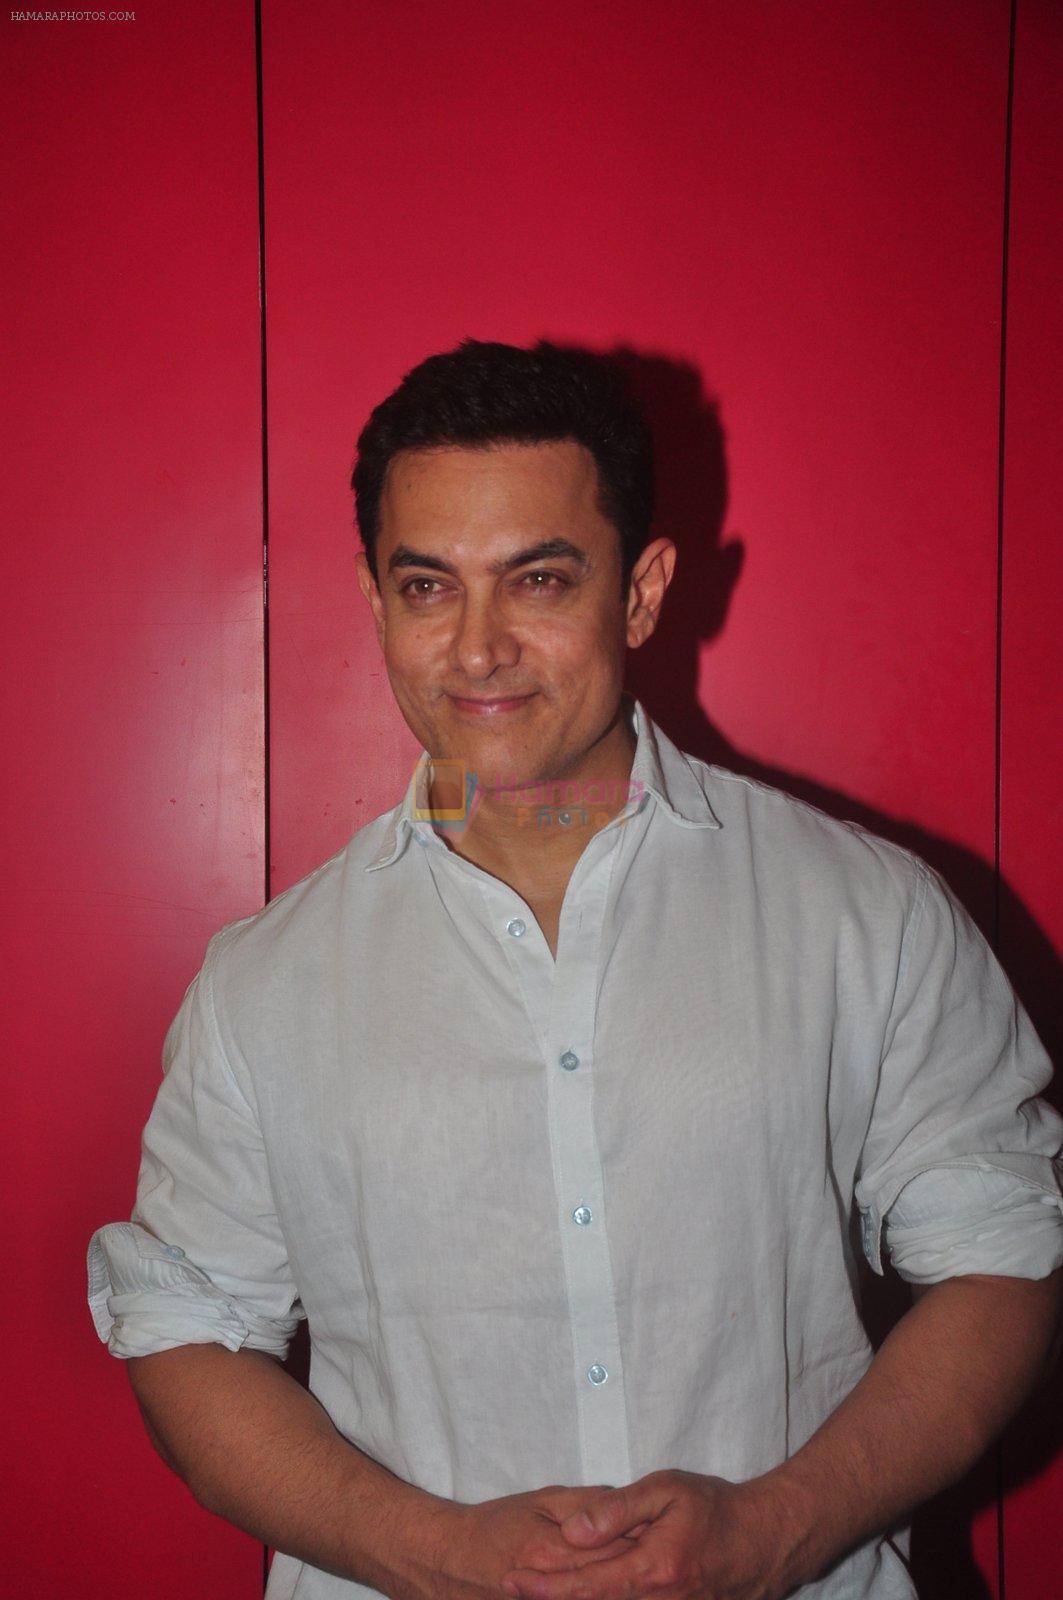 Aamir Khan talks about PK in Mumbai on 5th Dec 2014